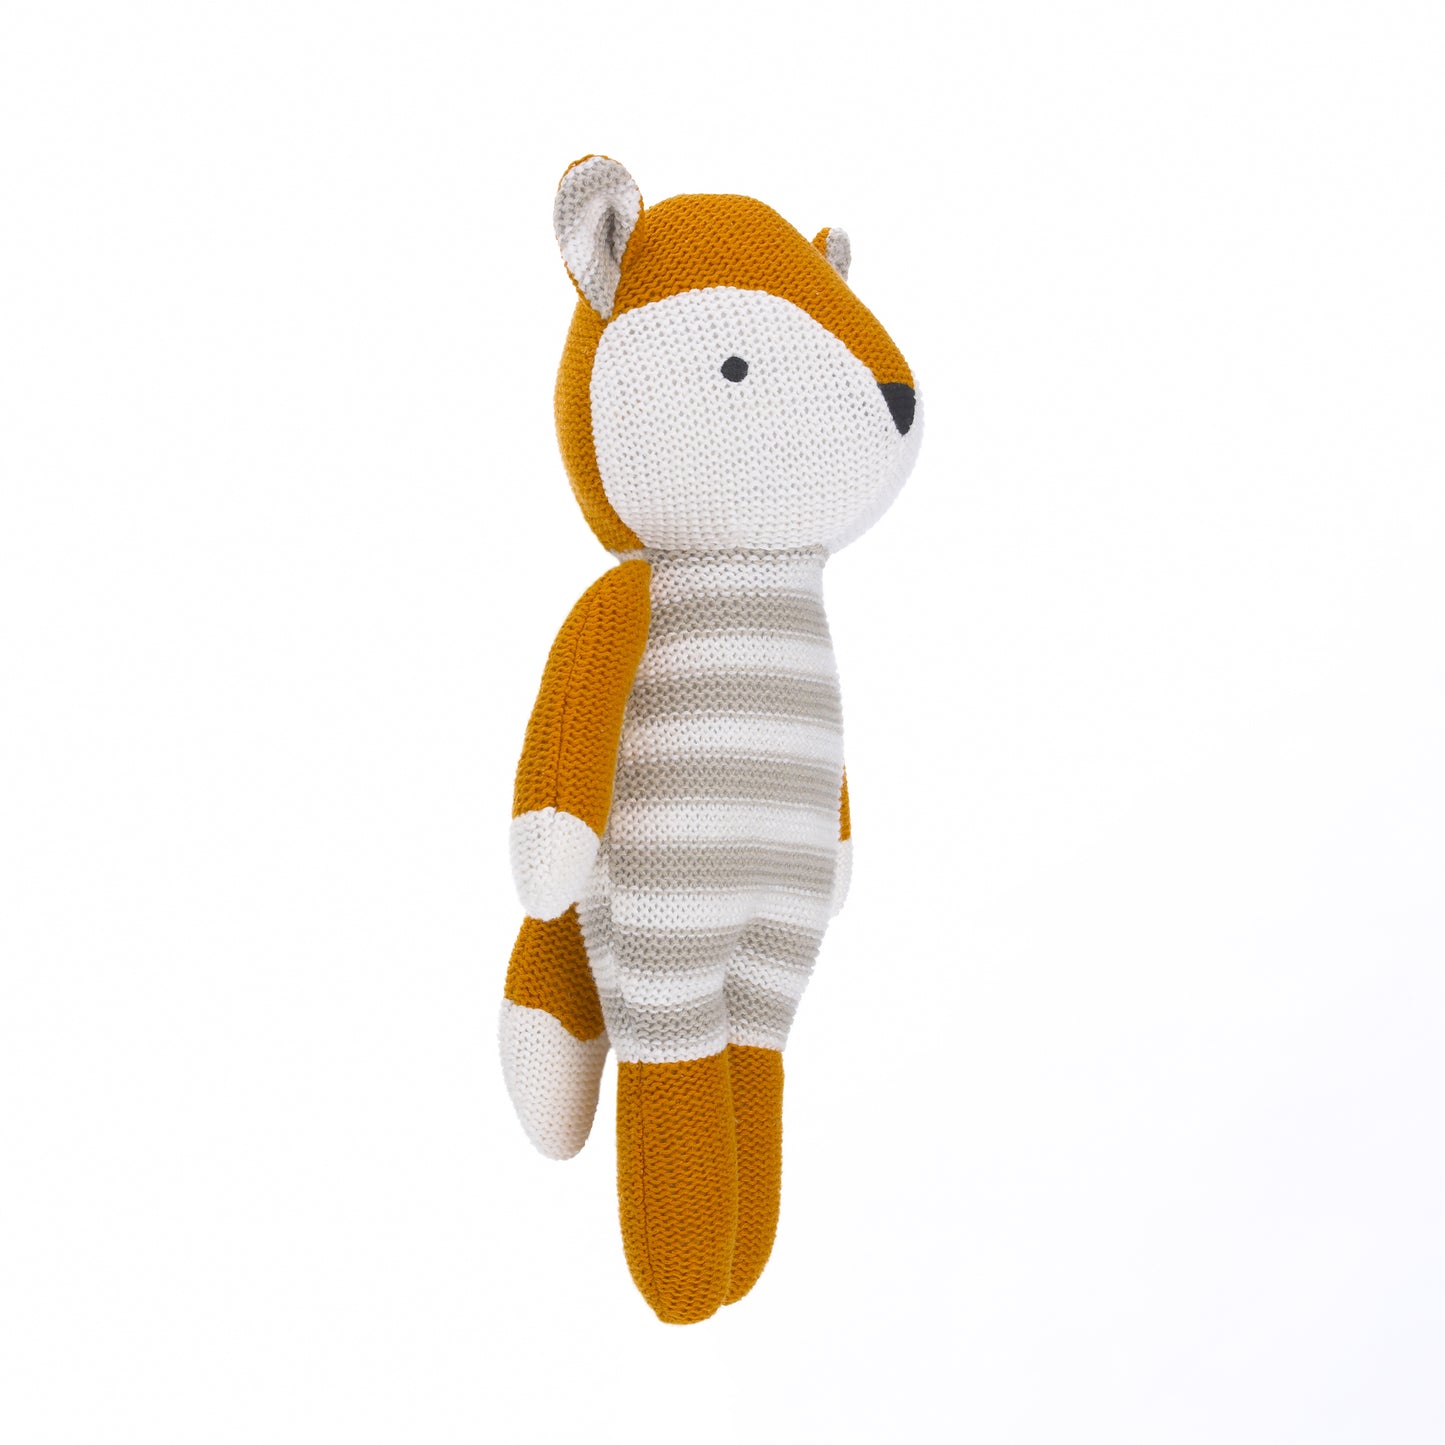 Cuddle Me Orange/White Fox 100% Cotton Knitted Plush Toy - Tobey